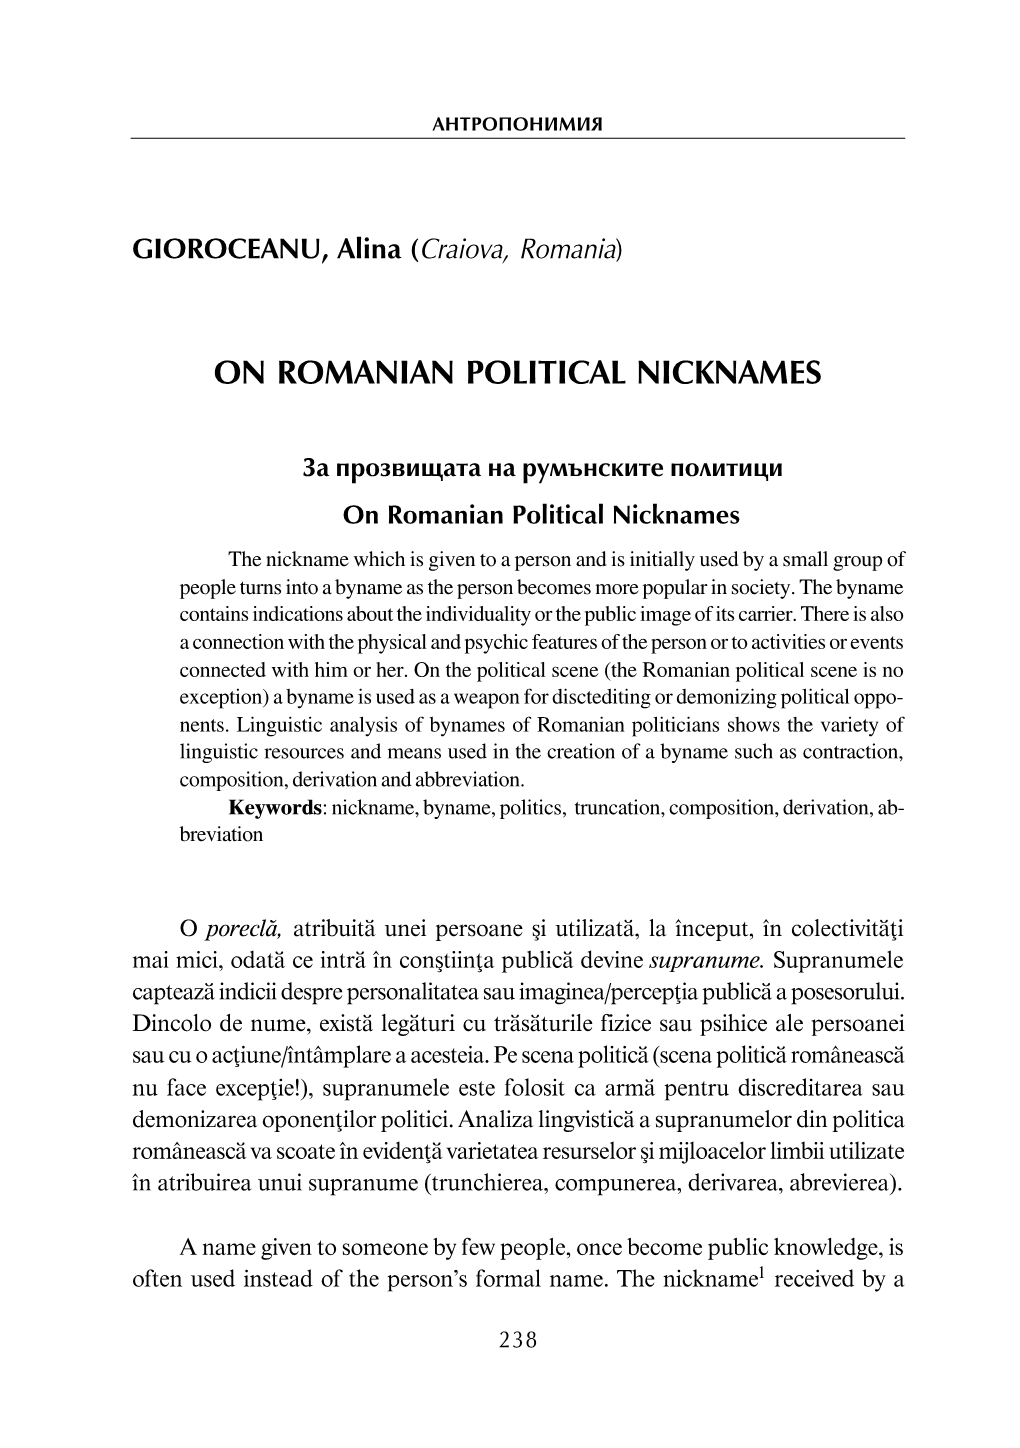 On Romanian Political Nicknames